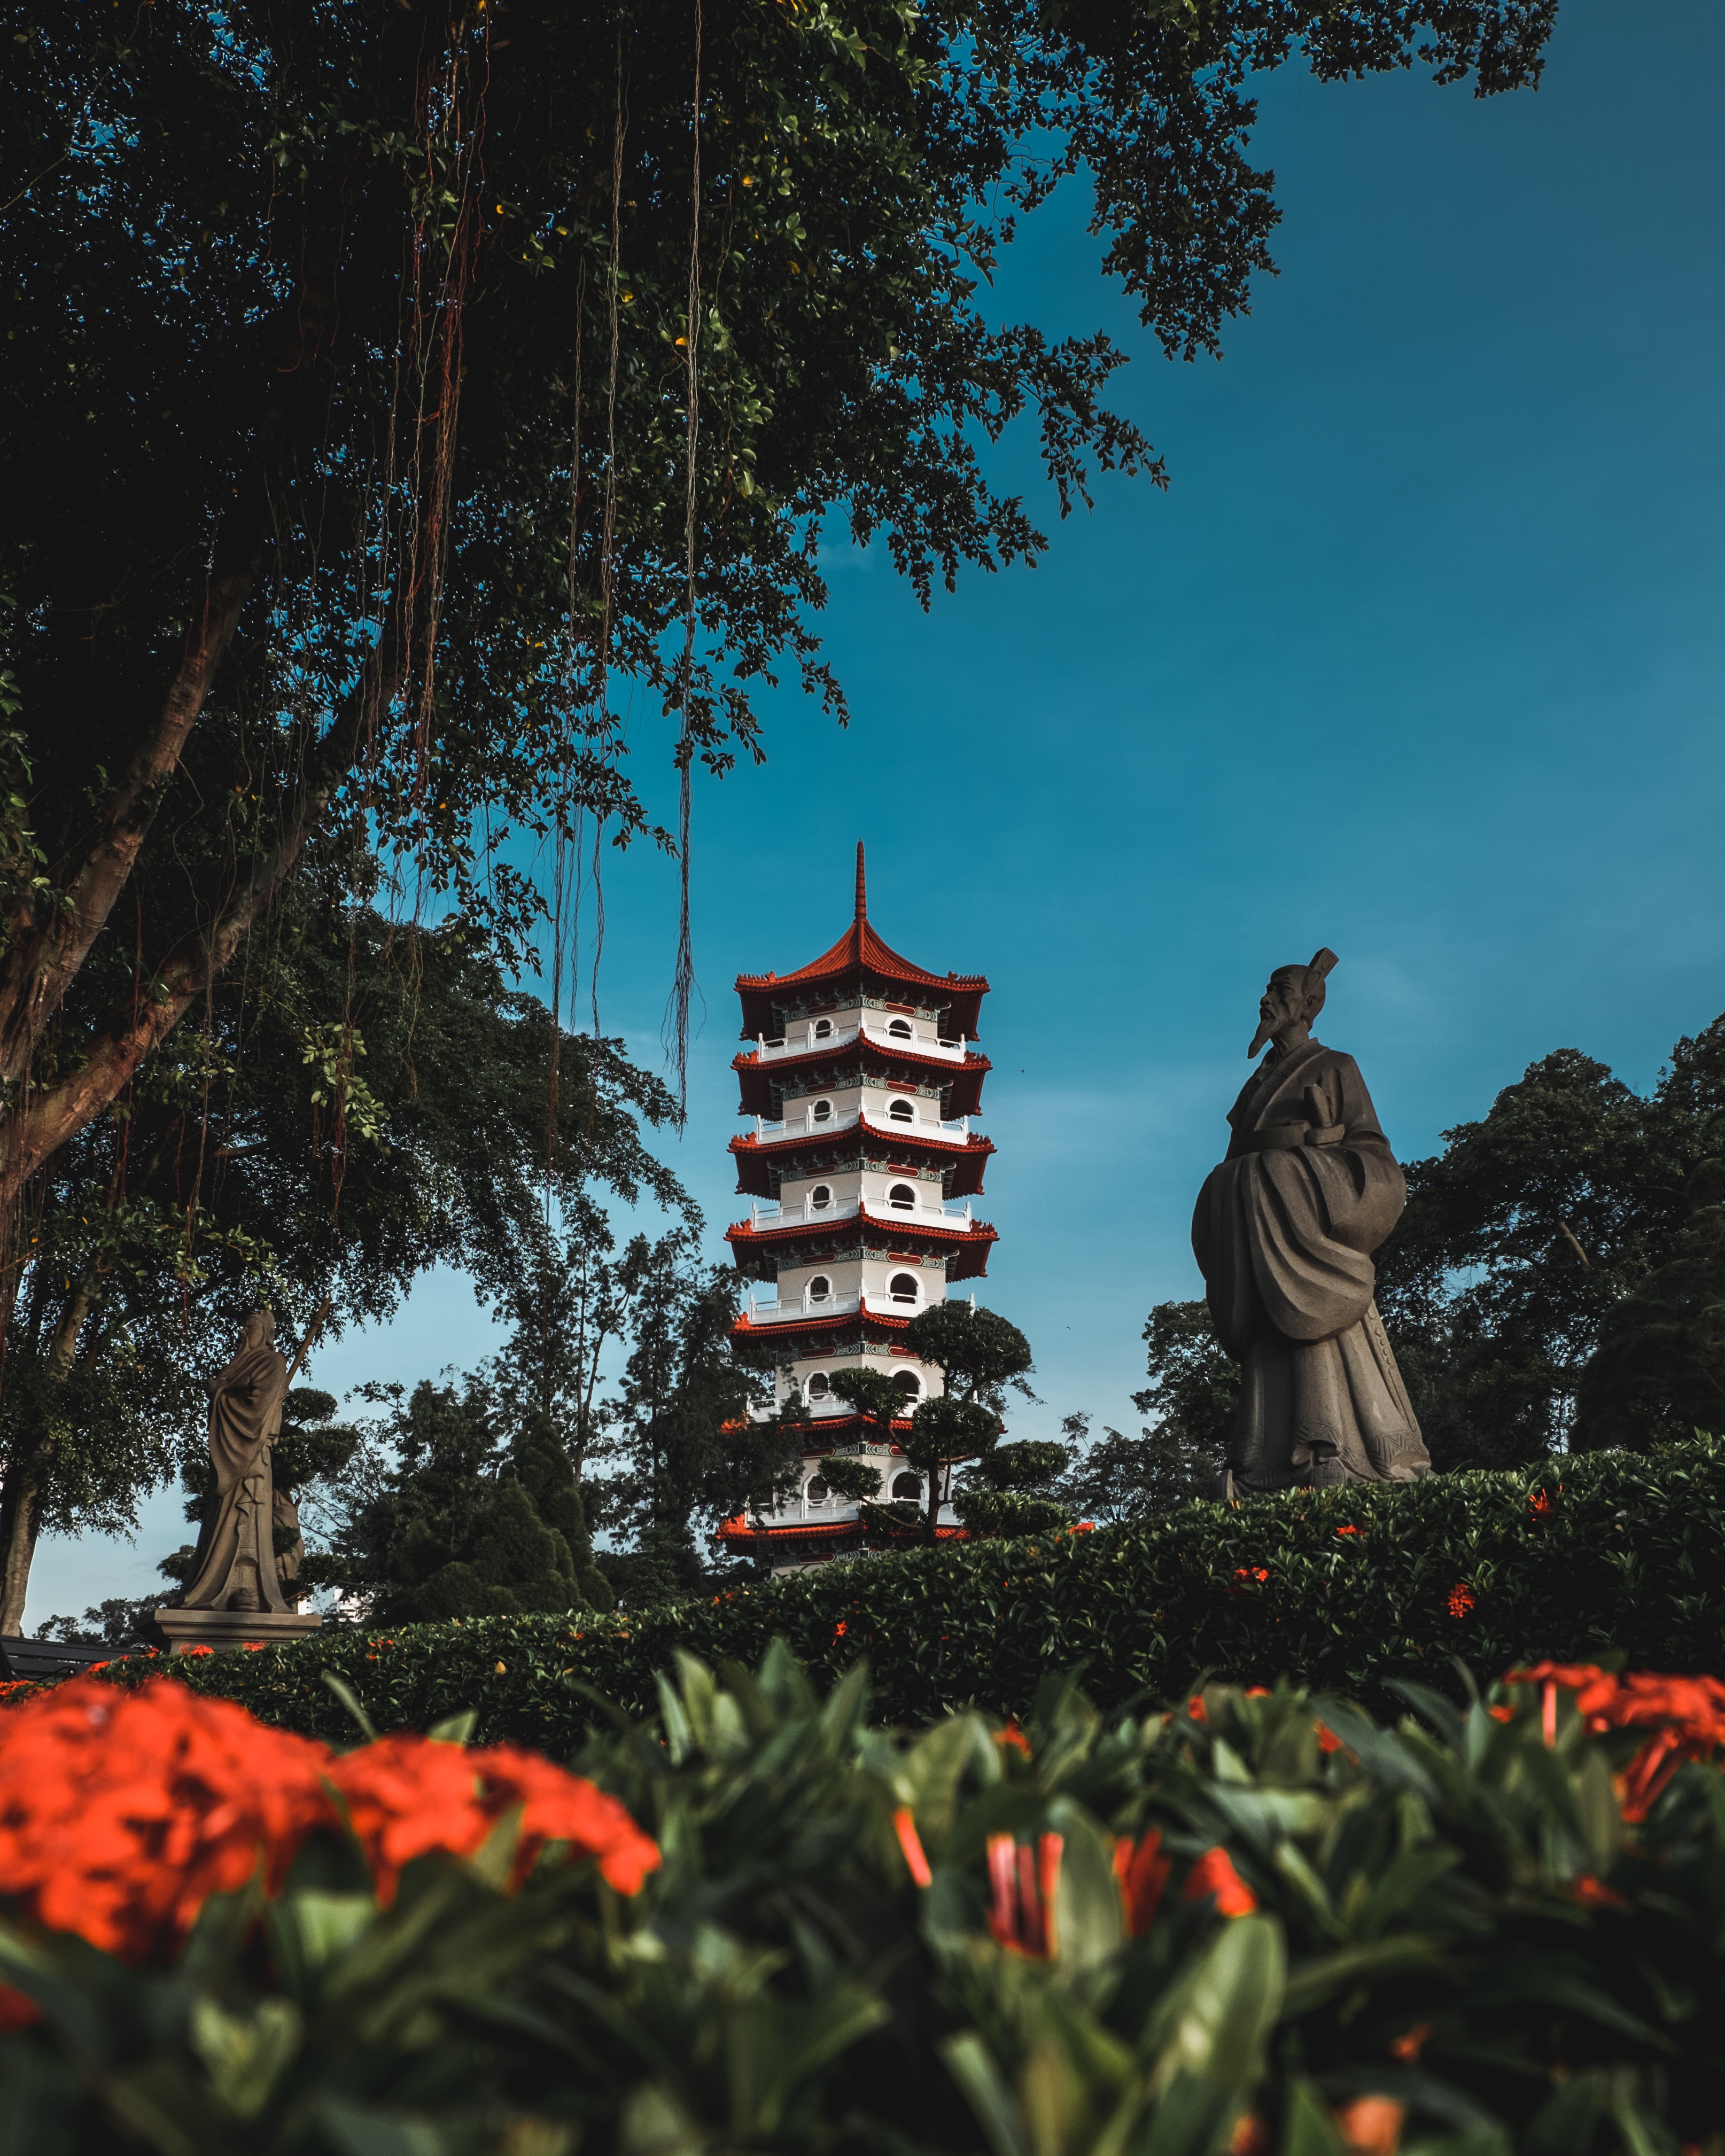 flowers, trees, bush, building, miscellanea, miscellaneous, pagoda, statue